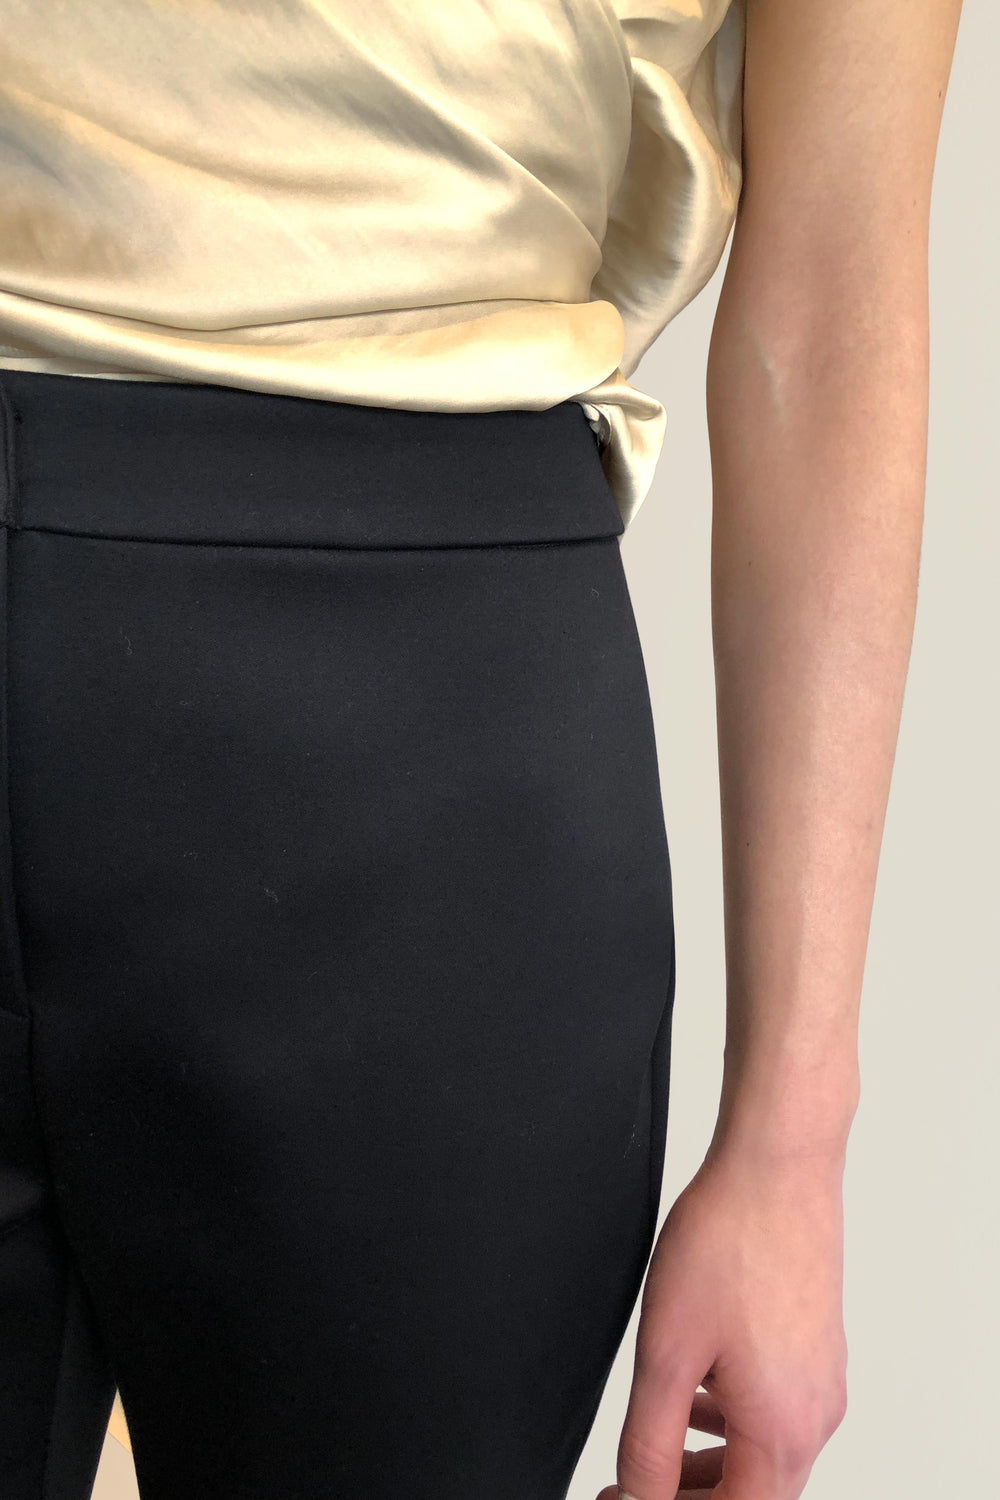 Fashion Designer CARL KAPP collection | Obsidian Tailored Structured Black Satin Trousers, Pants | Sydney Australia